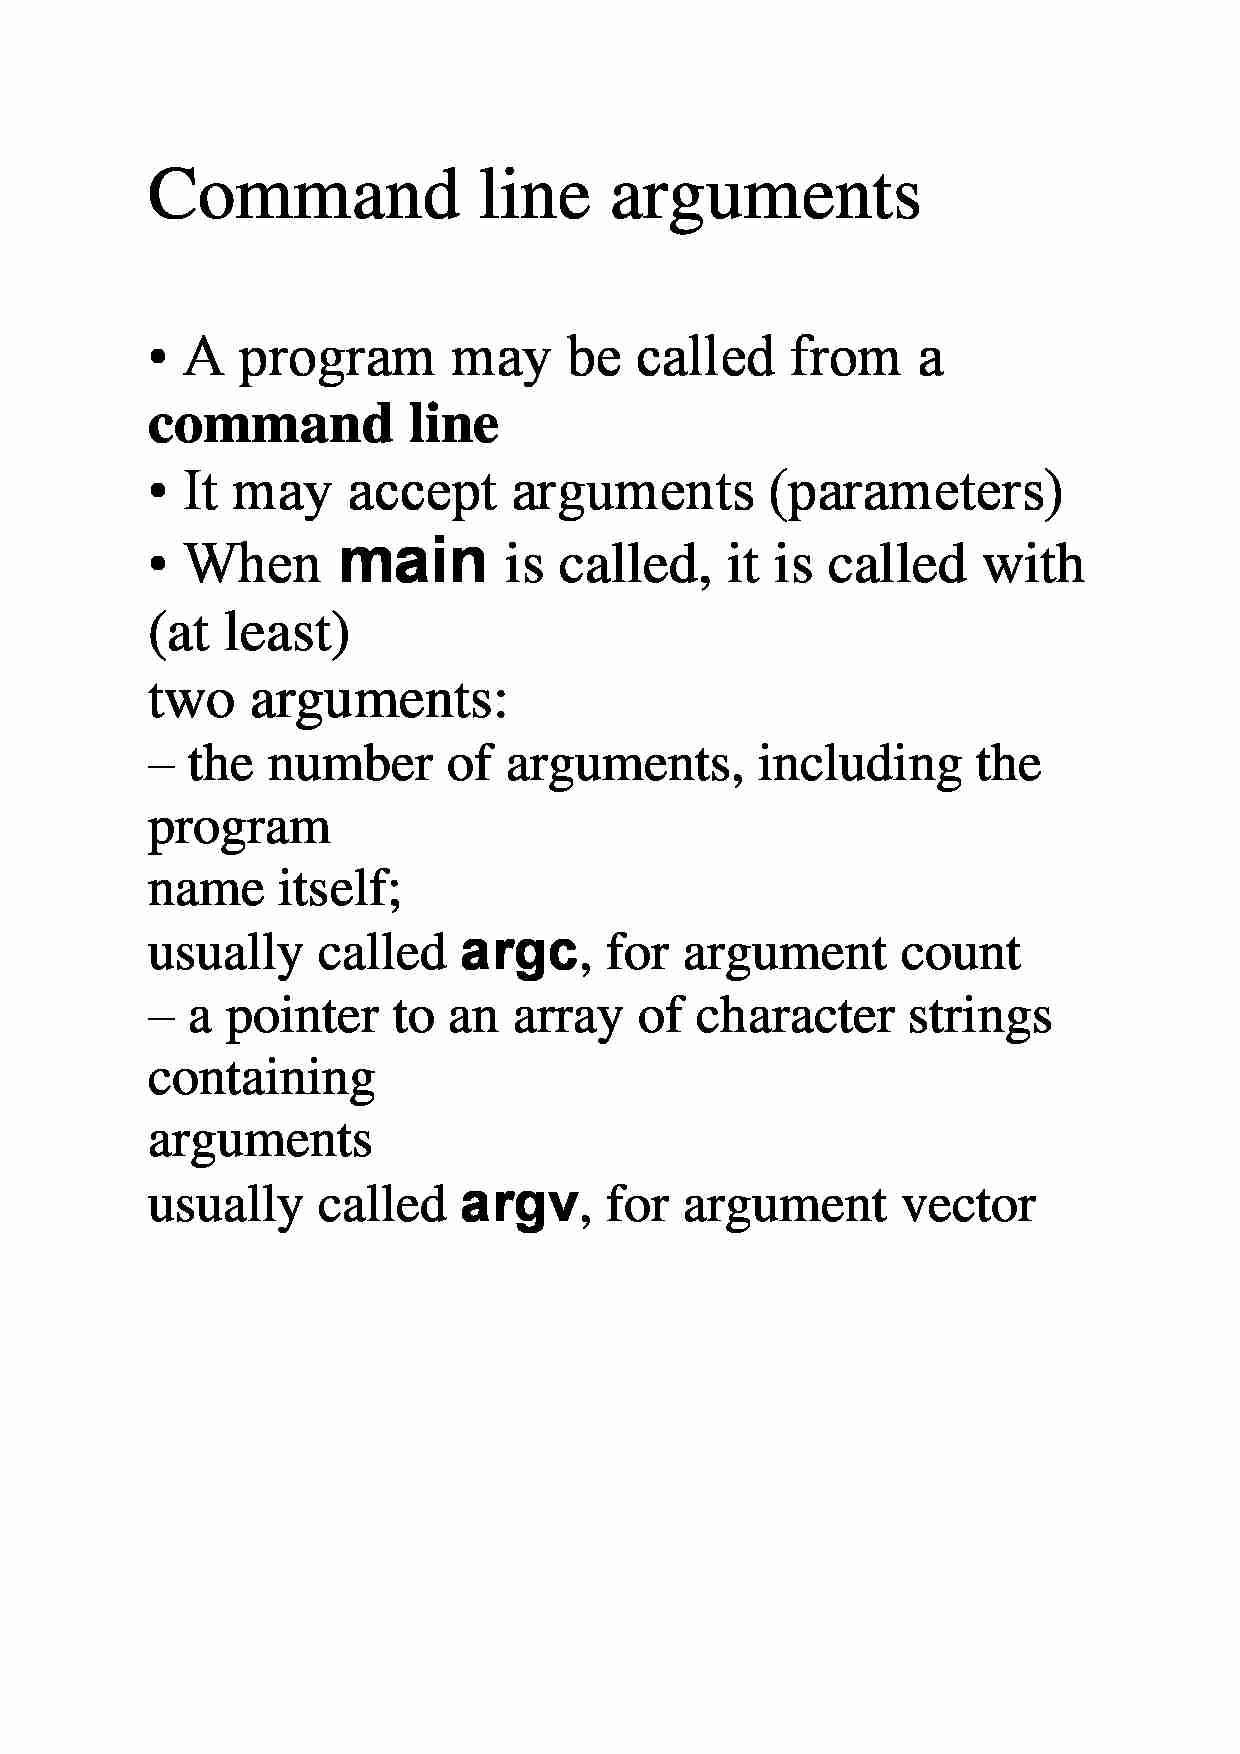 Command line arguments - strona 1